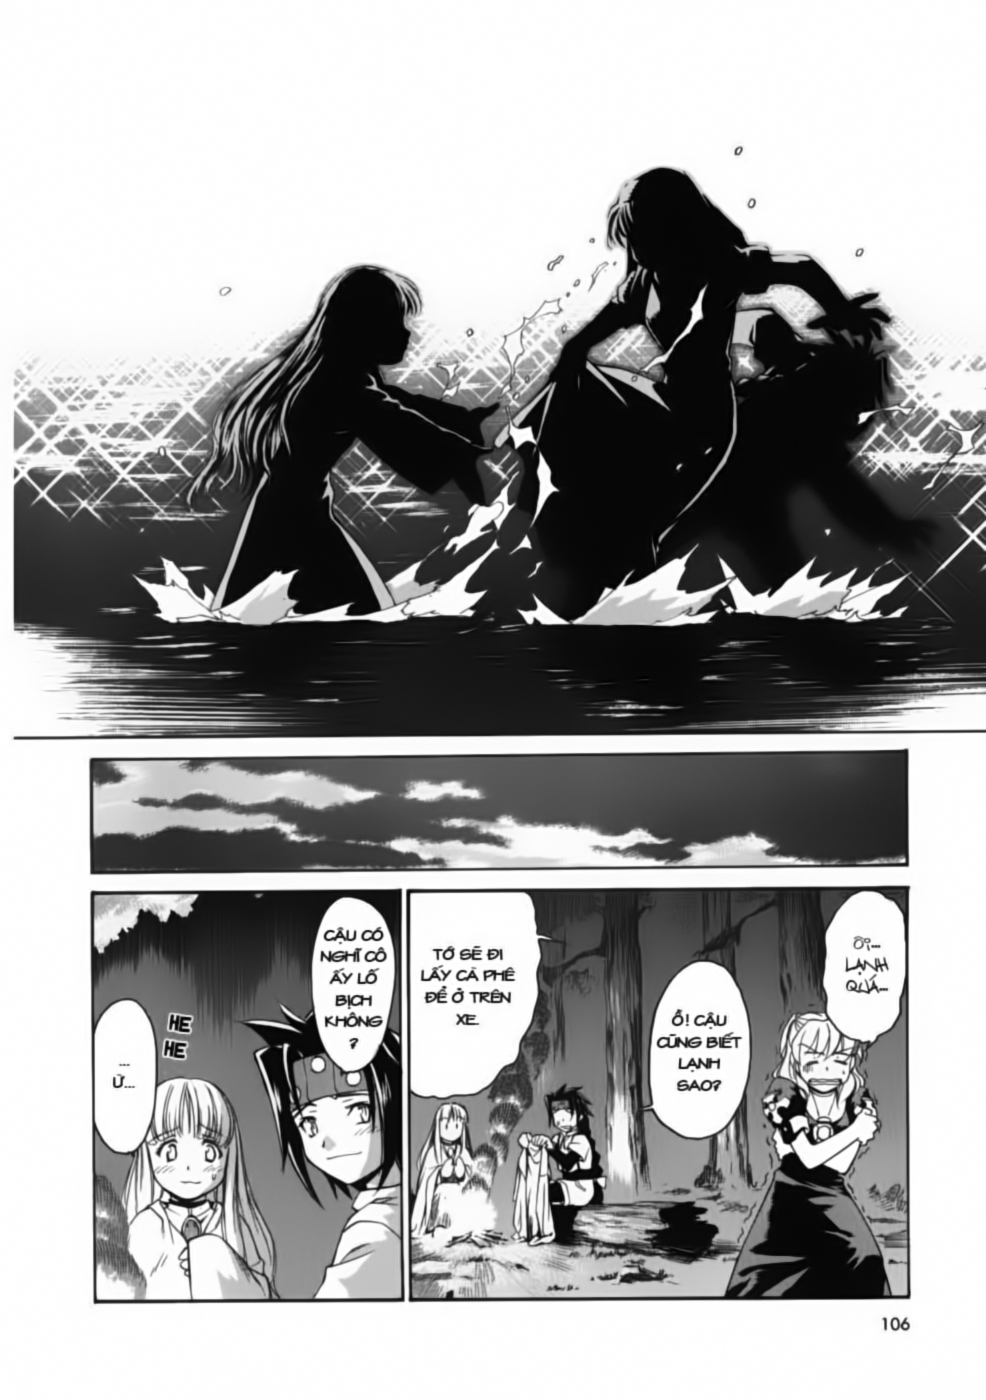 [Manga] Chrono Crusade (Đọc online tại SSF) CHRNO-CRUSADE-01-106